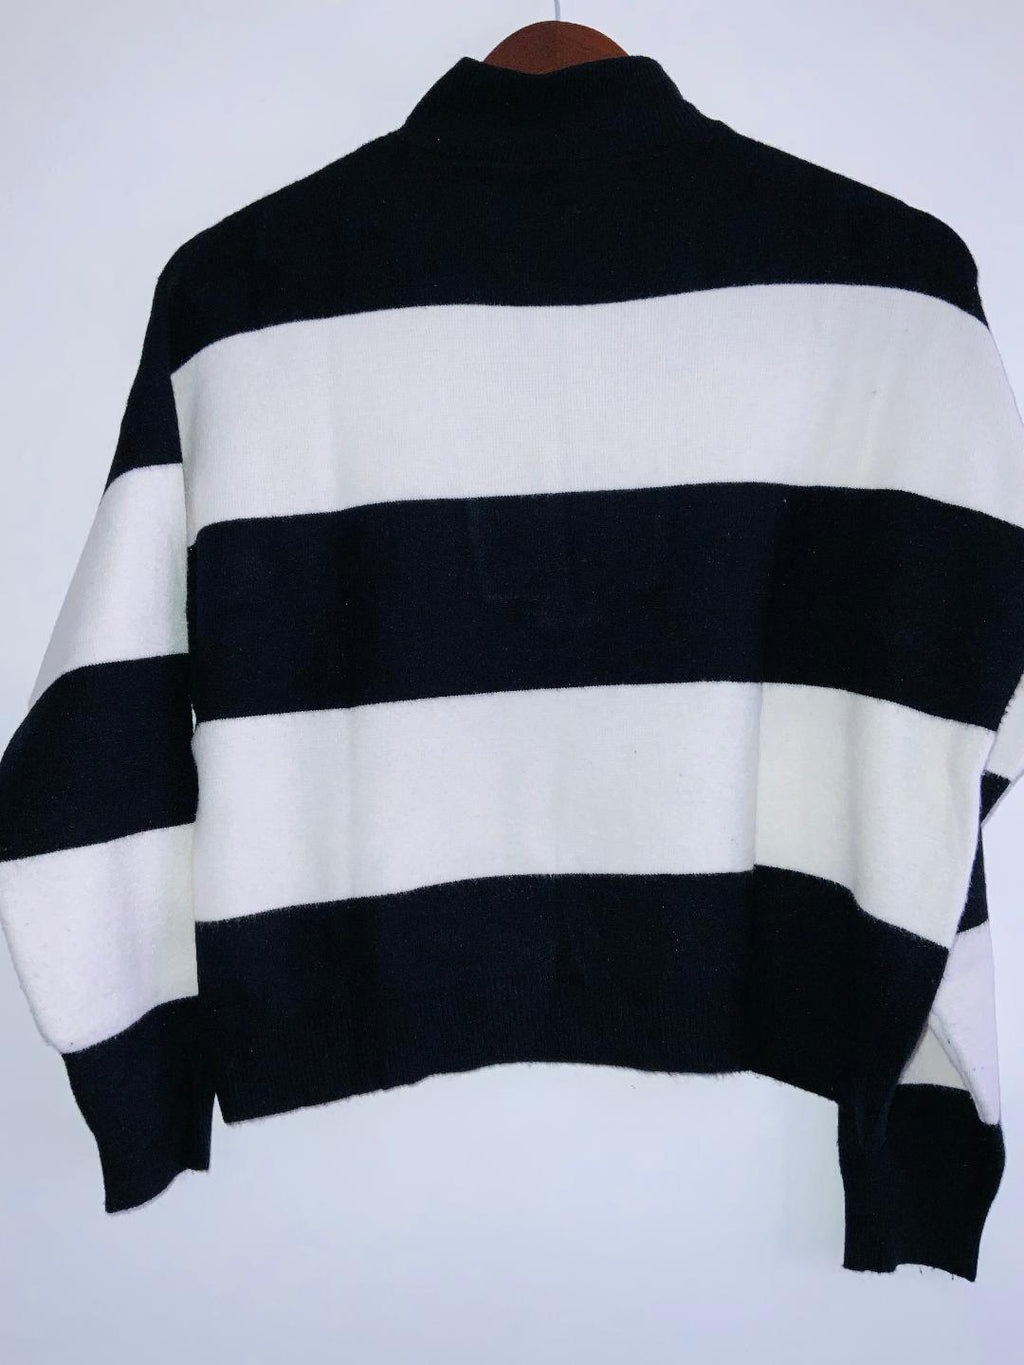 STRADIVARIUS Sweater tejido Franjas bicolor. Talla XS